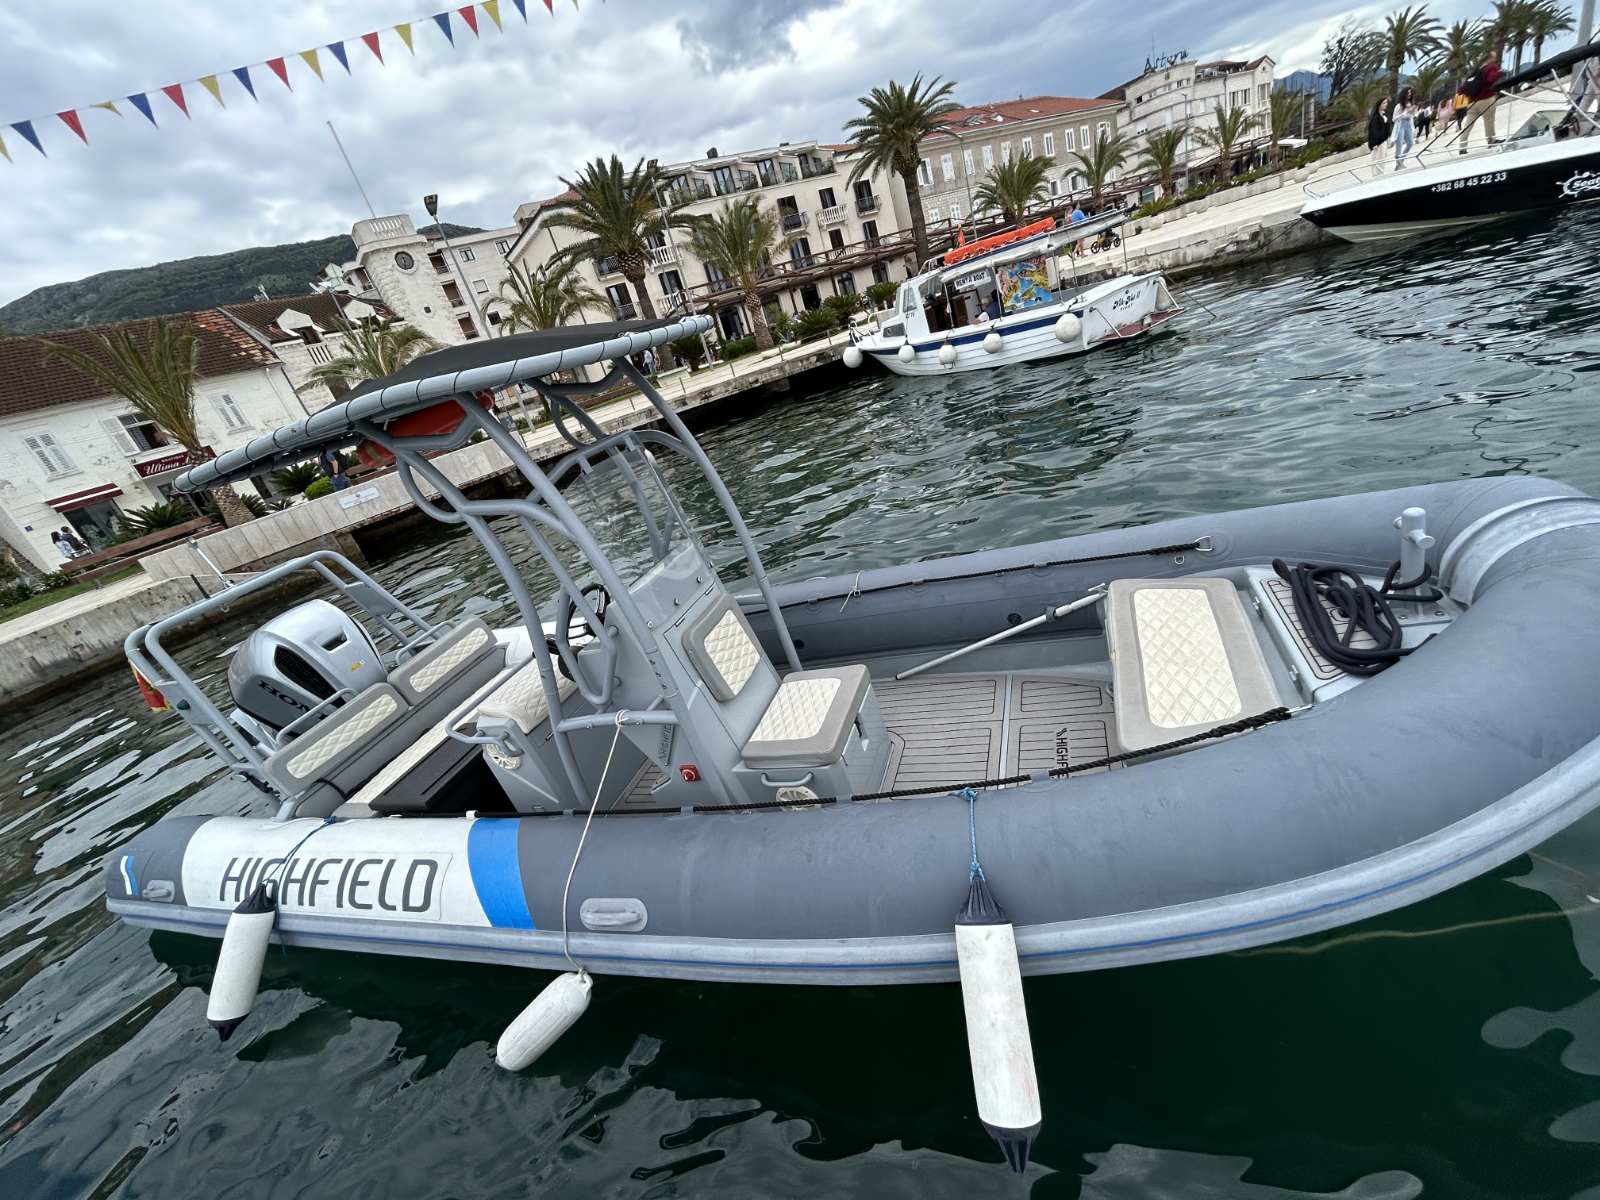 Highfield Patrol 660 - Yacht Charter Tivat & Boat hire in Montenegro Bay of Kotor Tivat Porto Montenegro 4